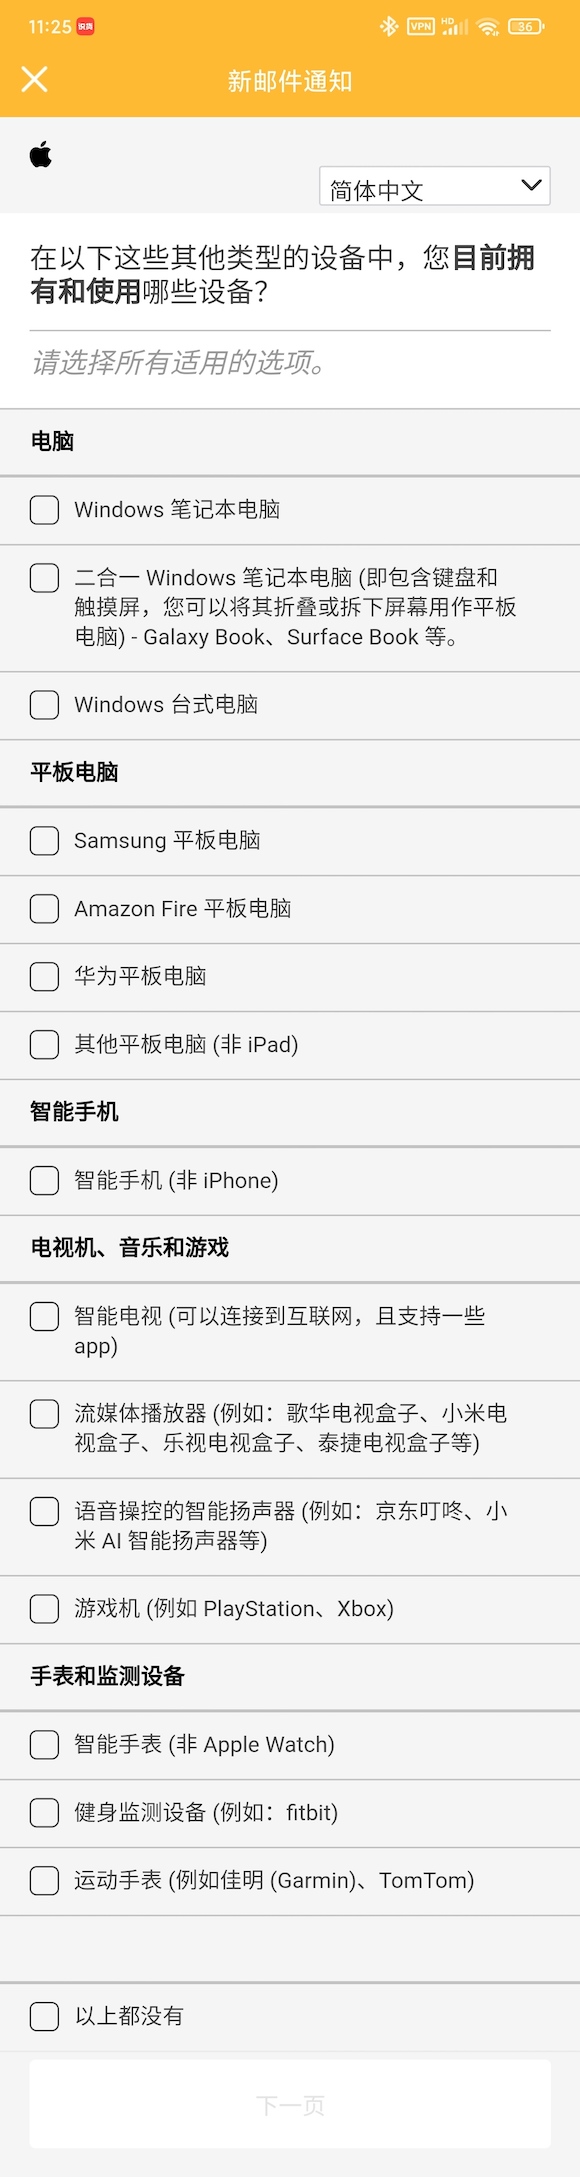 iPad mini 4 survey 2